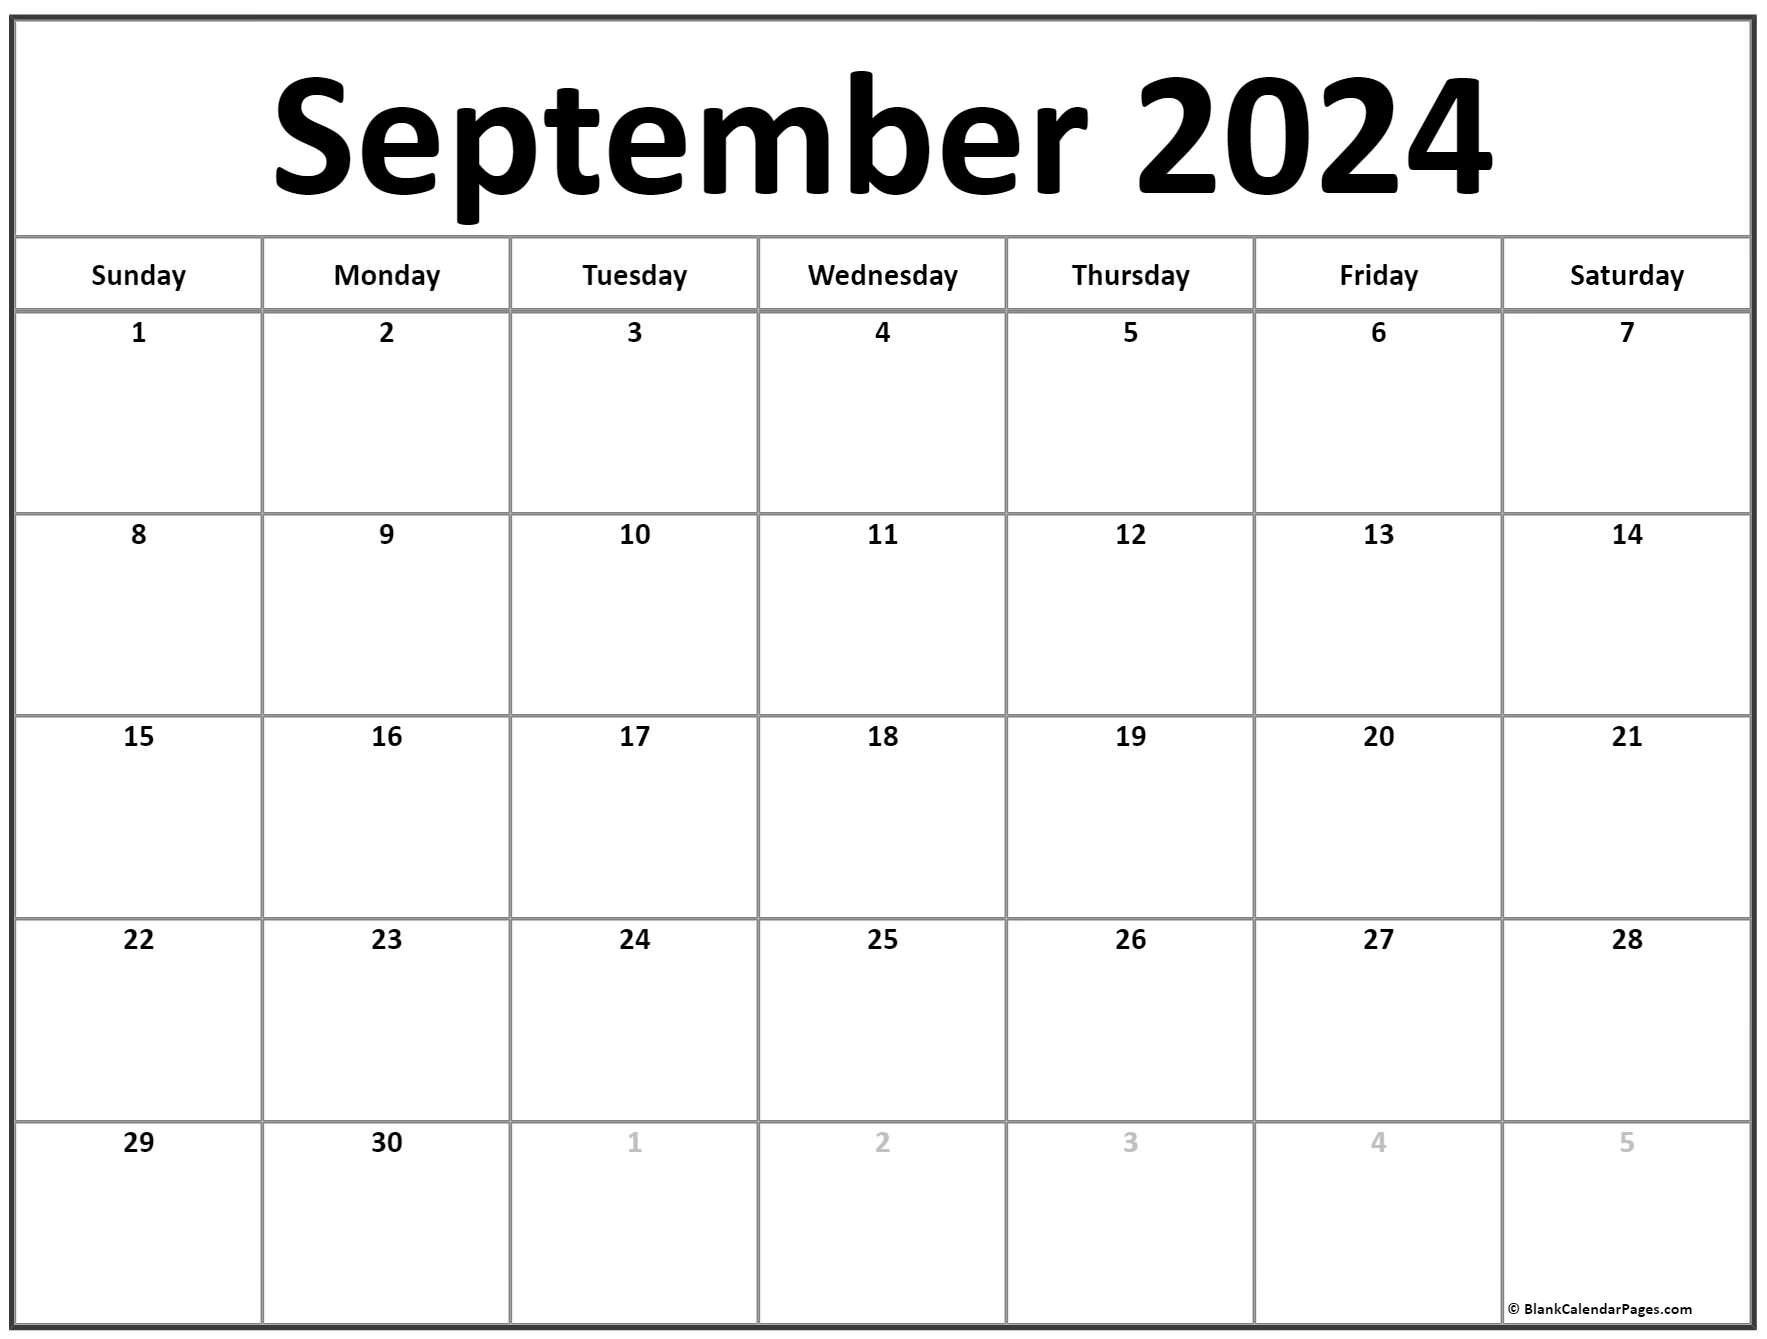 Sep 2022 Calendar September 2022 Calendar | Free Printable Calendar Templates